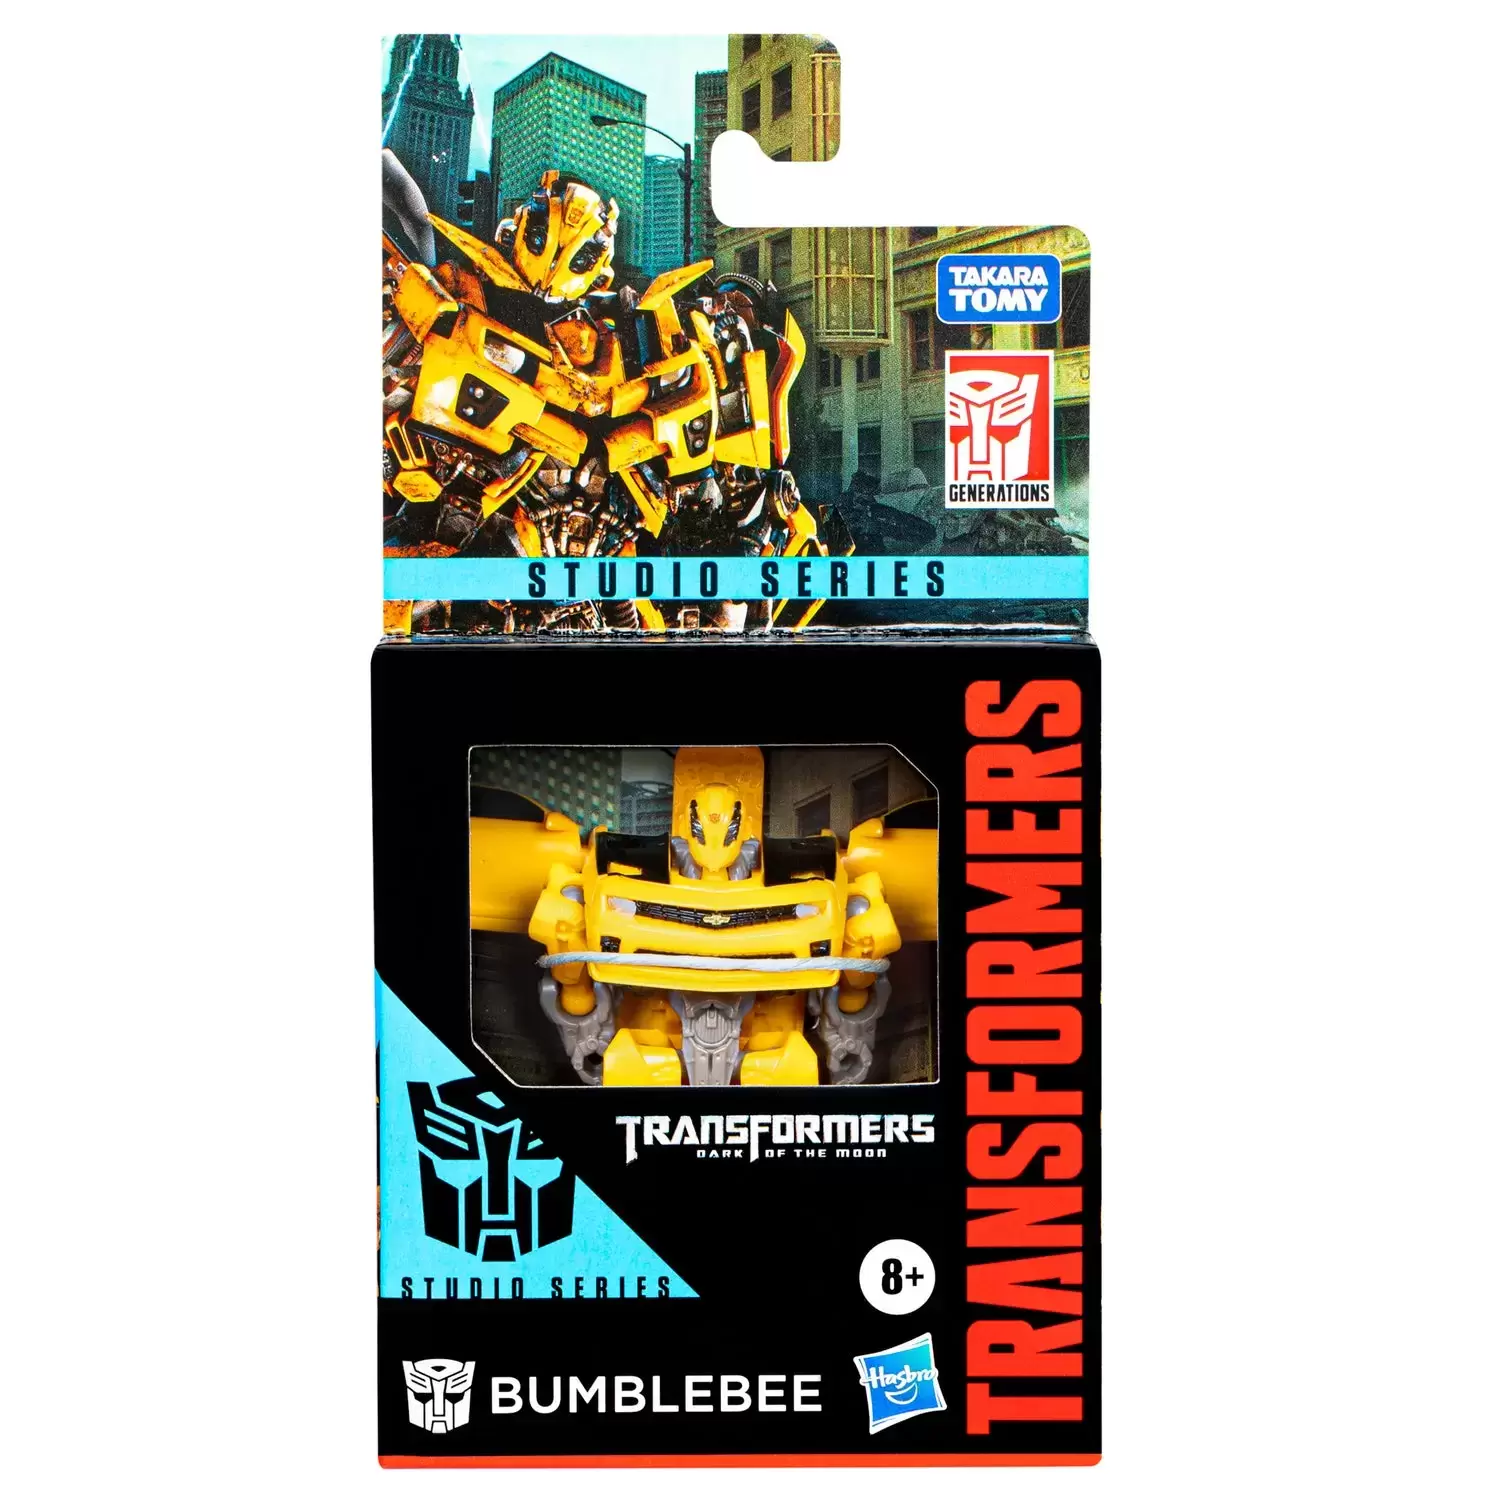 Transformers Studio Series - Bumblebee  (ROTB Core Class)